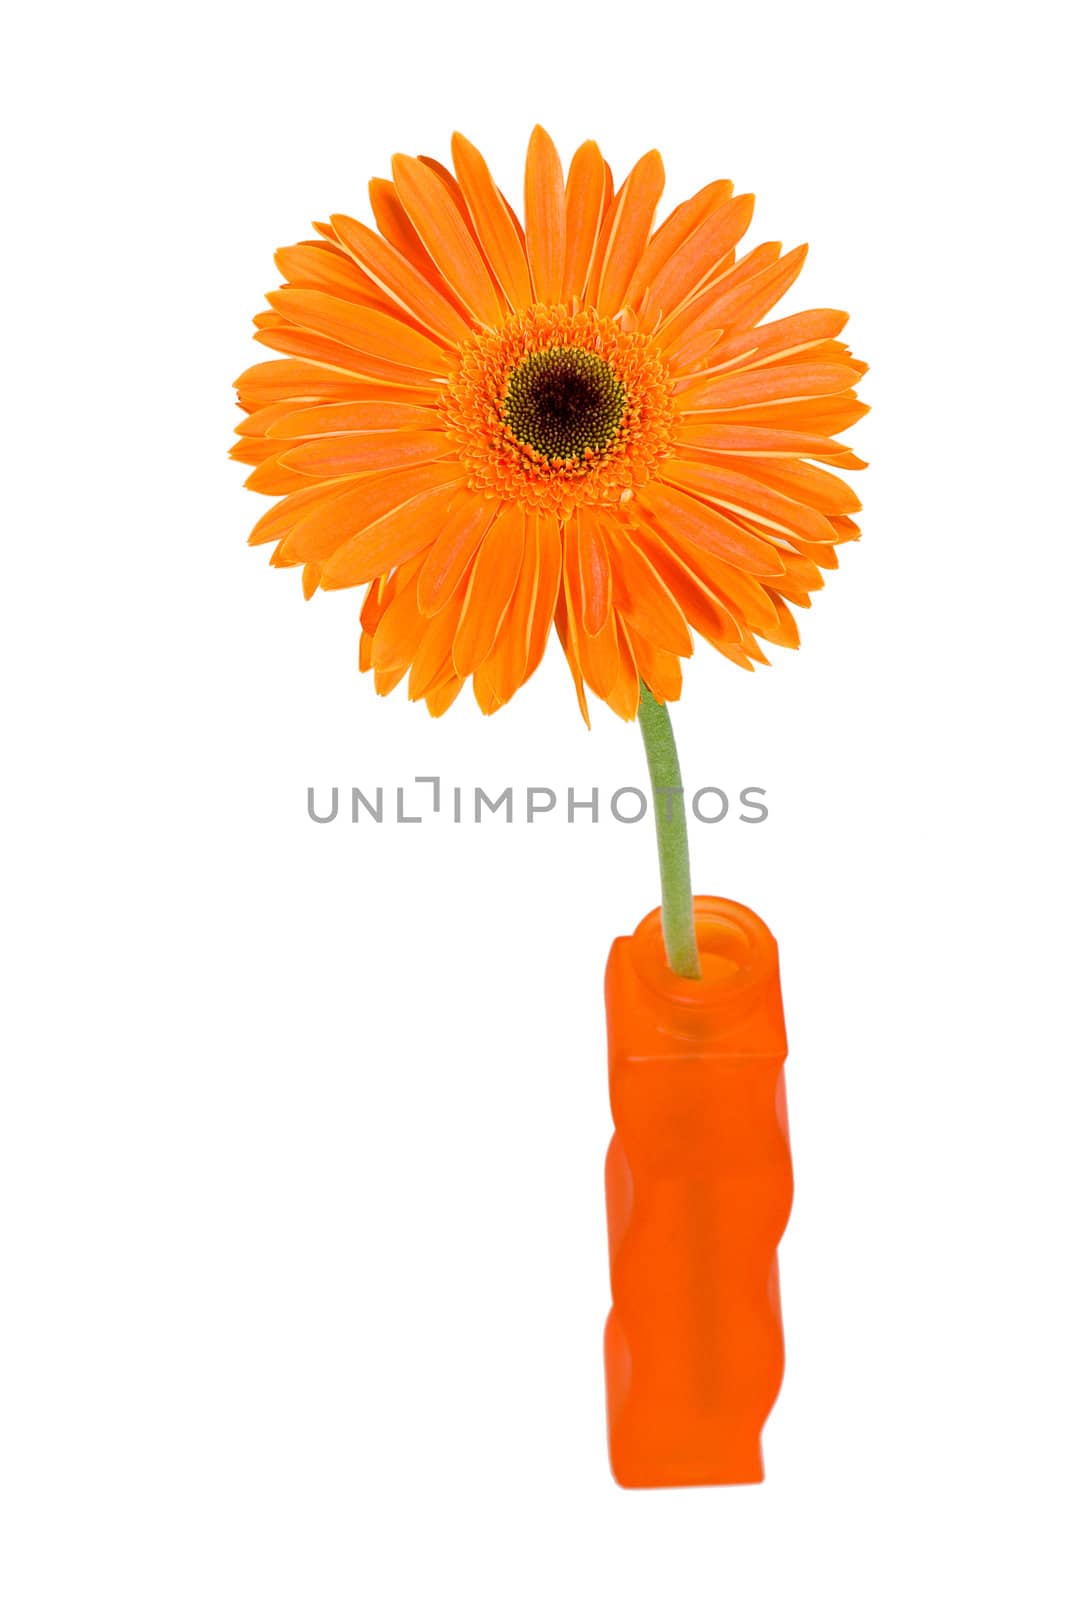 Gerbera Daisy in a orange vase by Sergius